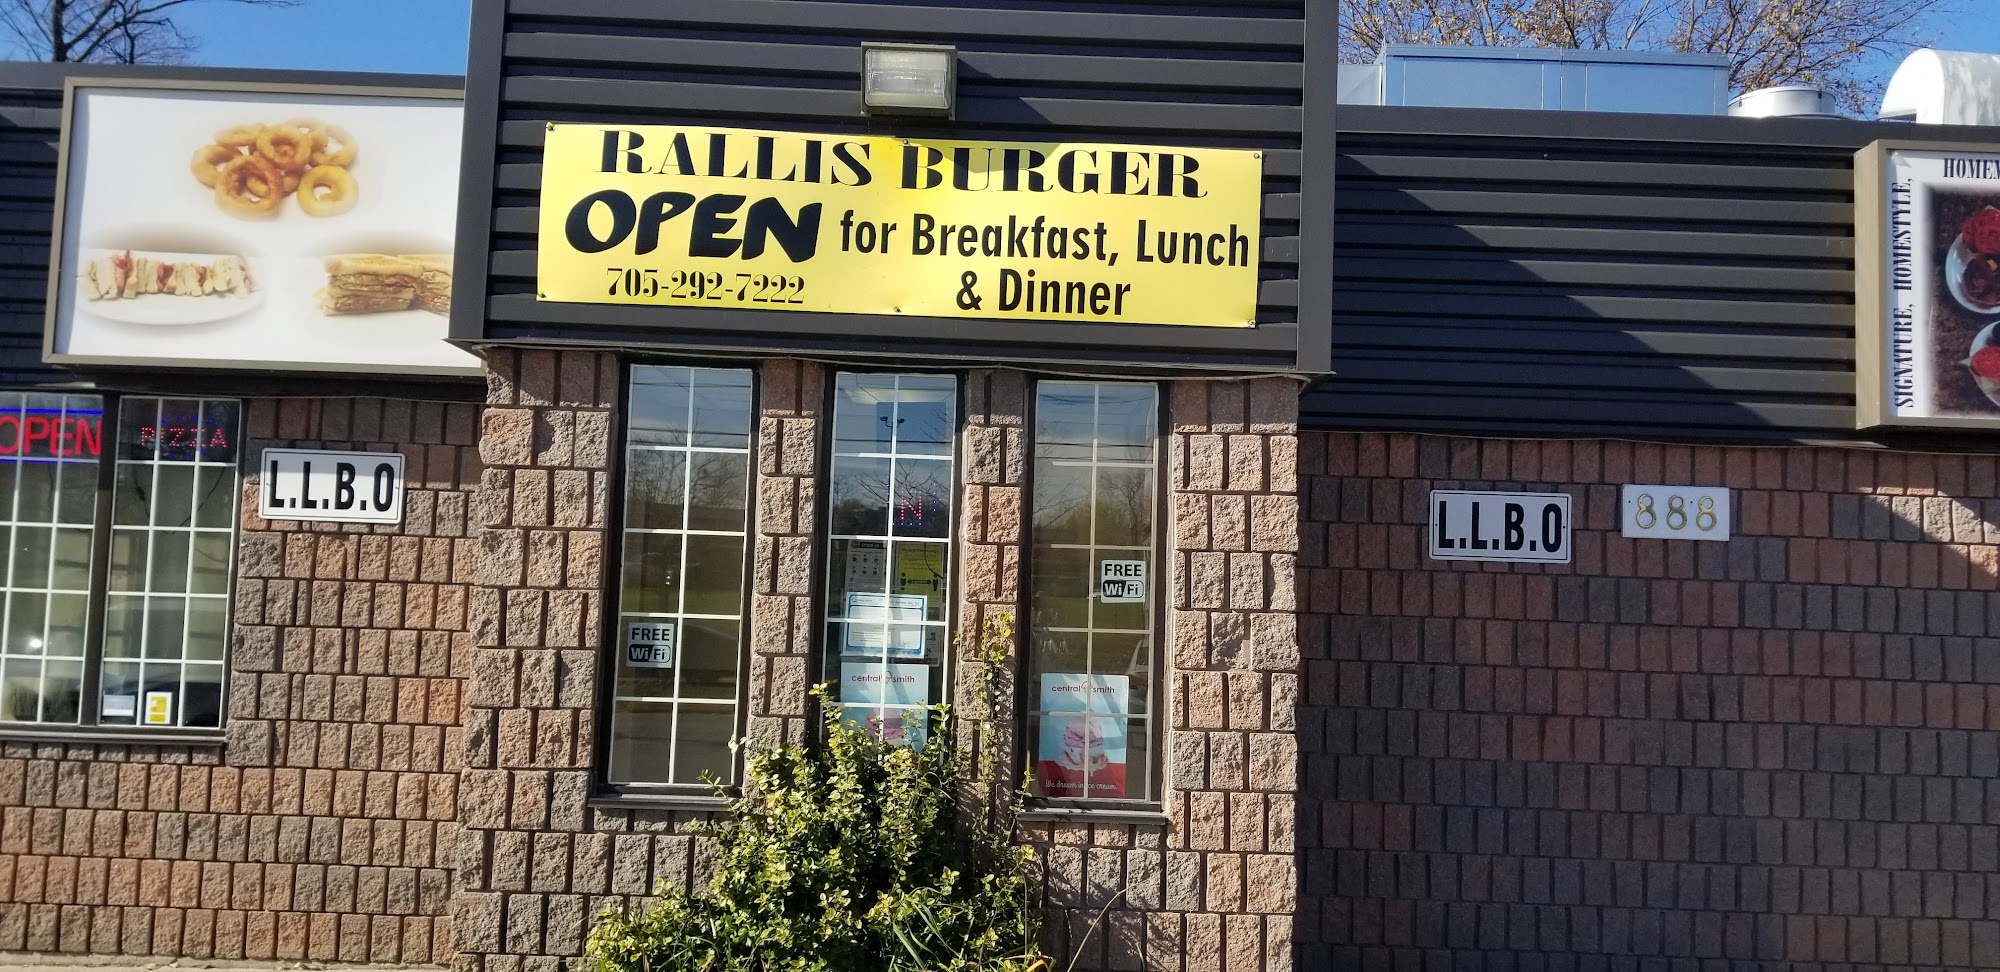 Rallis Burger Family Restaurant